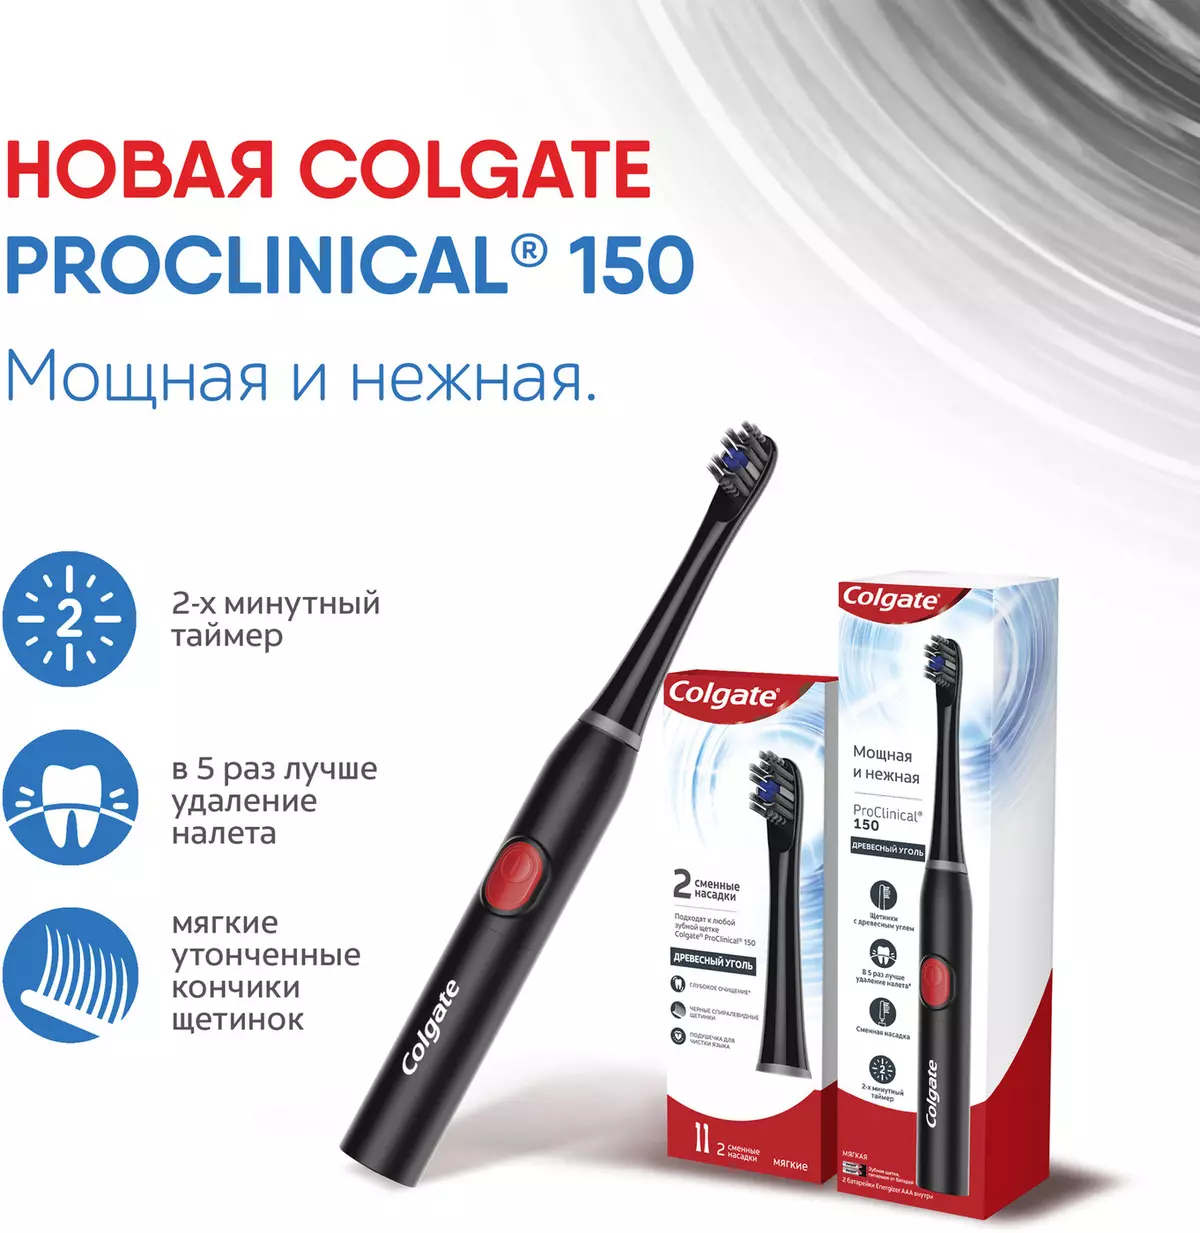 Electric Toothbrushes Colgate: 360 ოპტიკური თეთრი, პროკლინიკური 150 